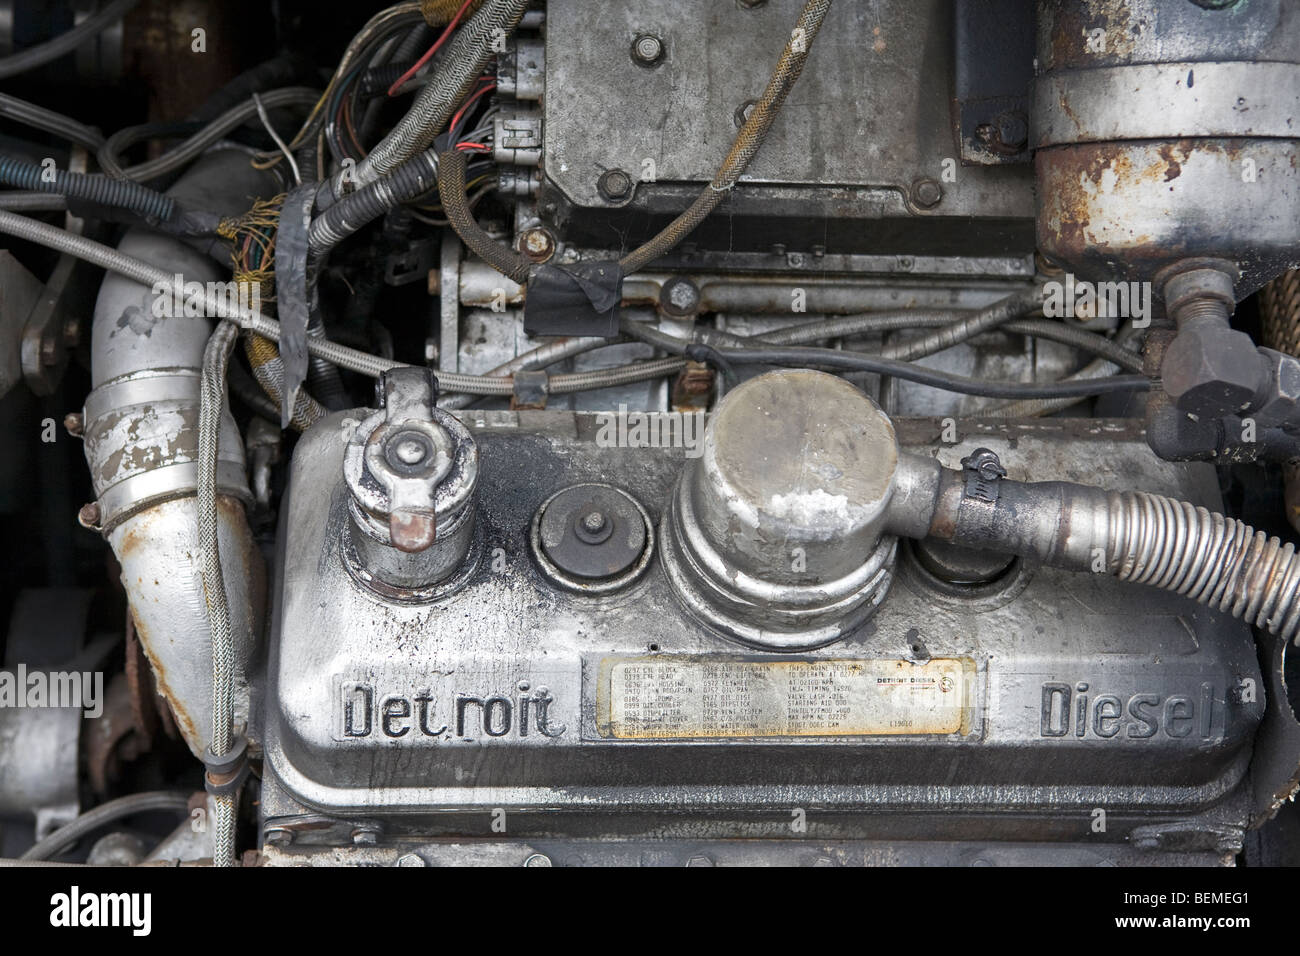 Antiguo motor diesel Detroit Foto de stock